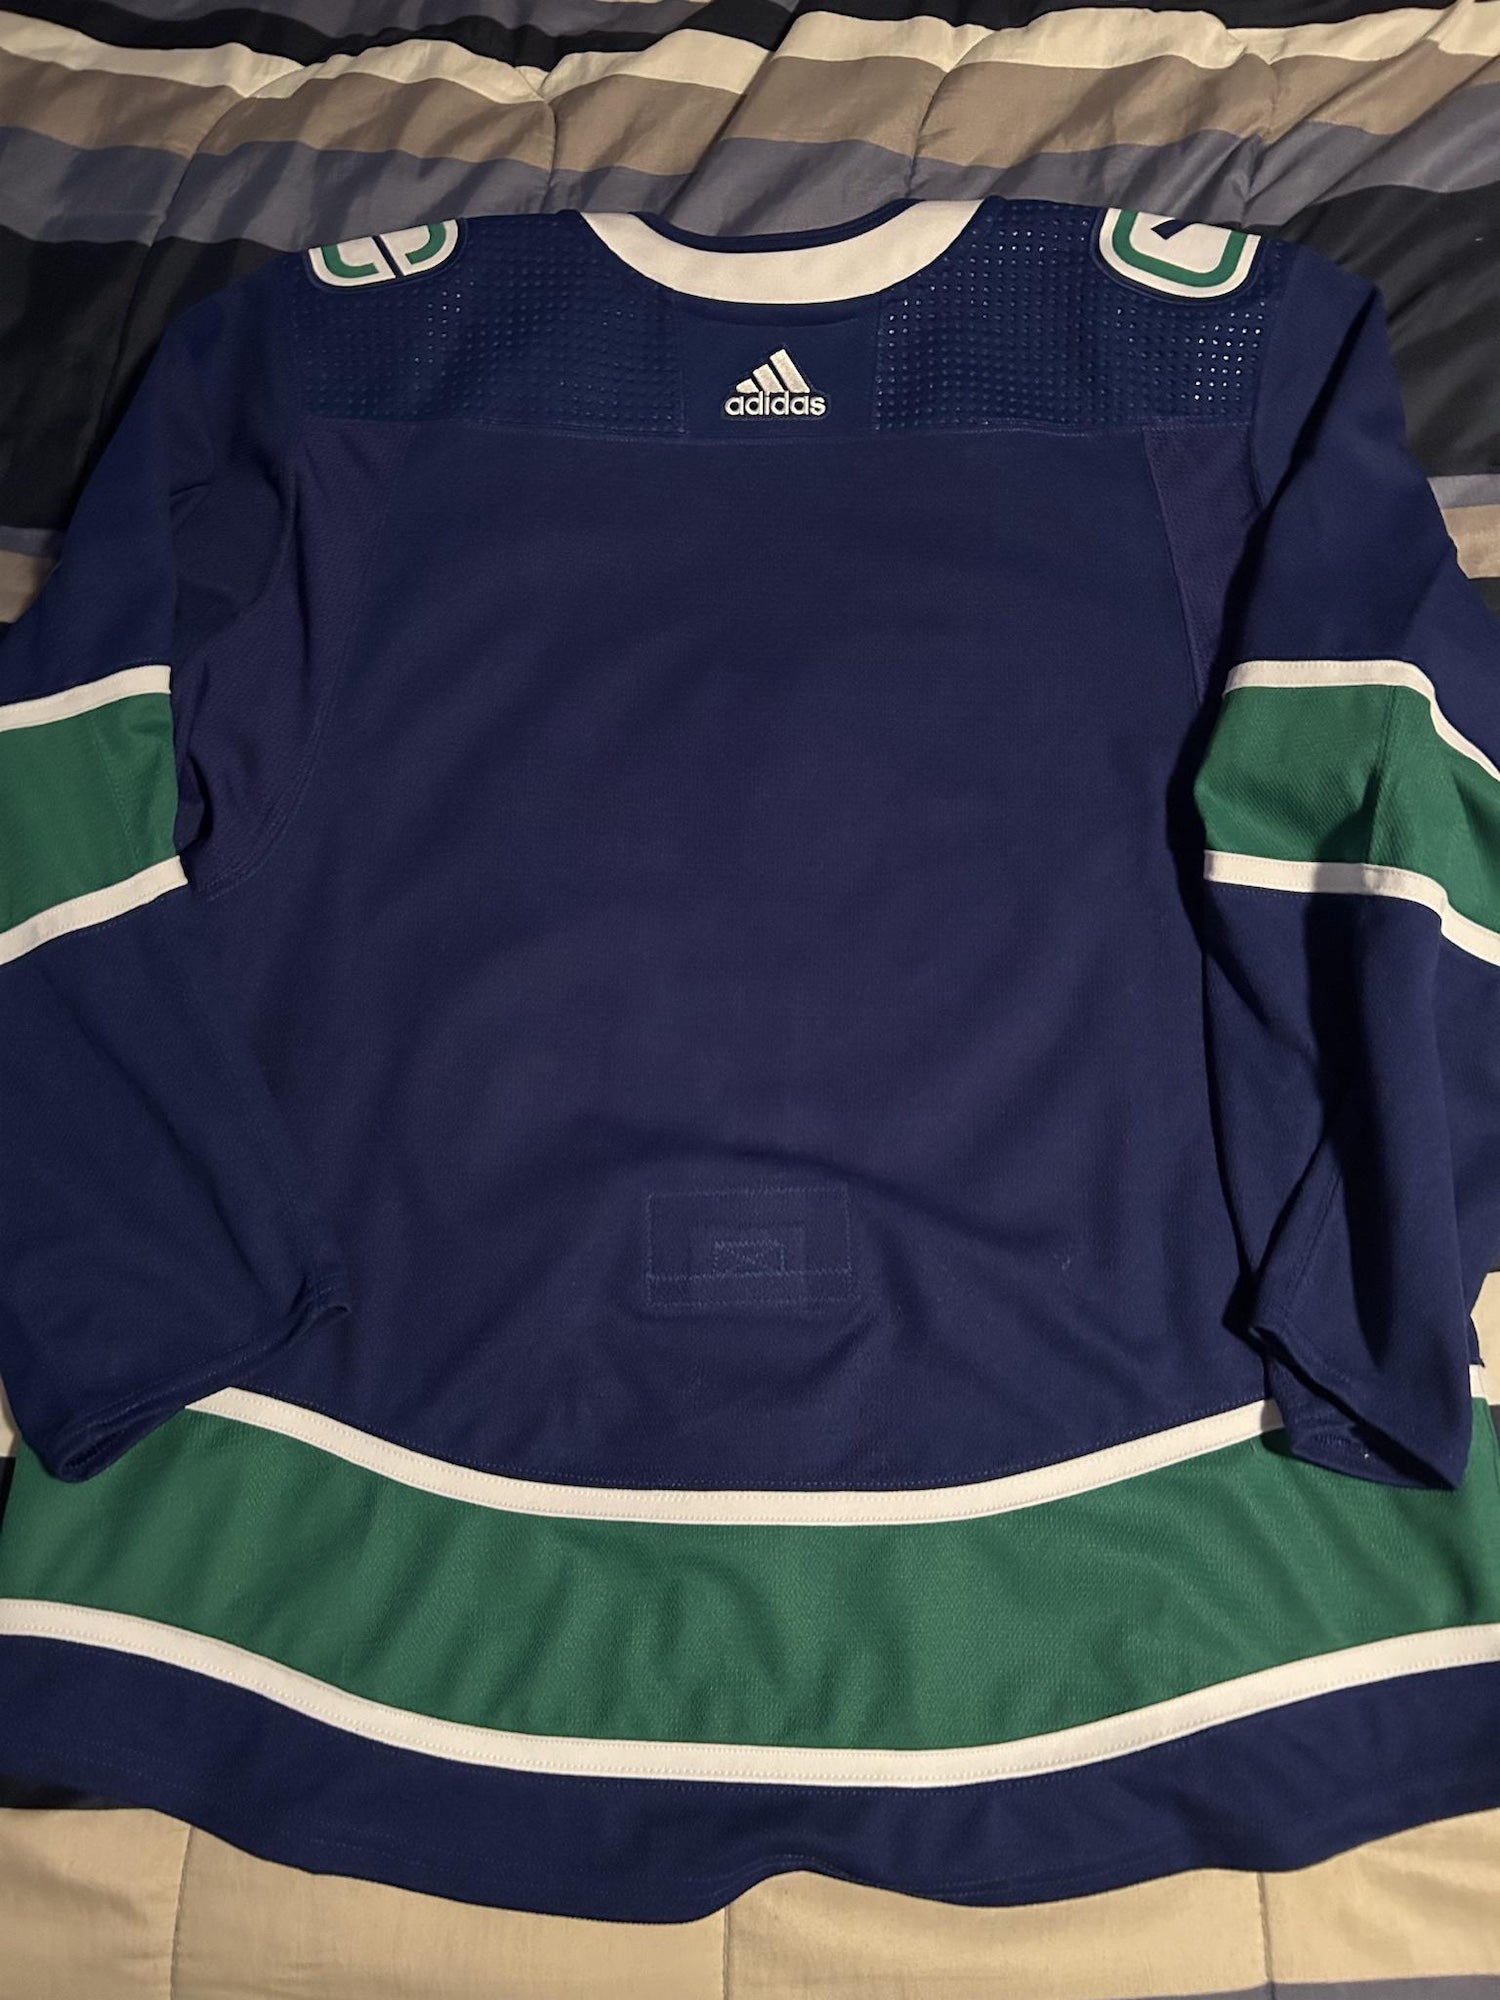 Player Issue! MIC Made in Canada Men’s 52 Arizona State ASU Adidas Hockey  Jersey